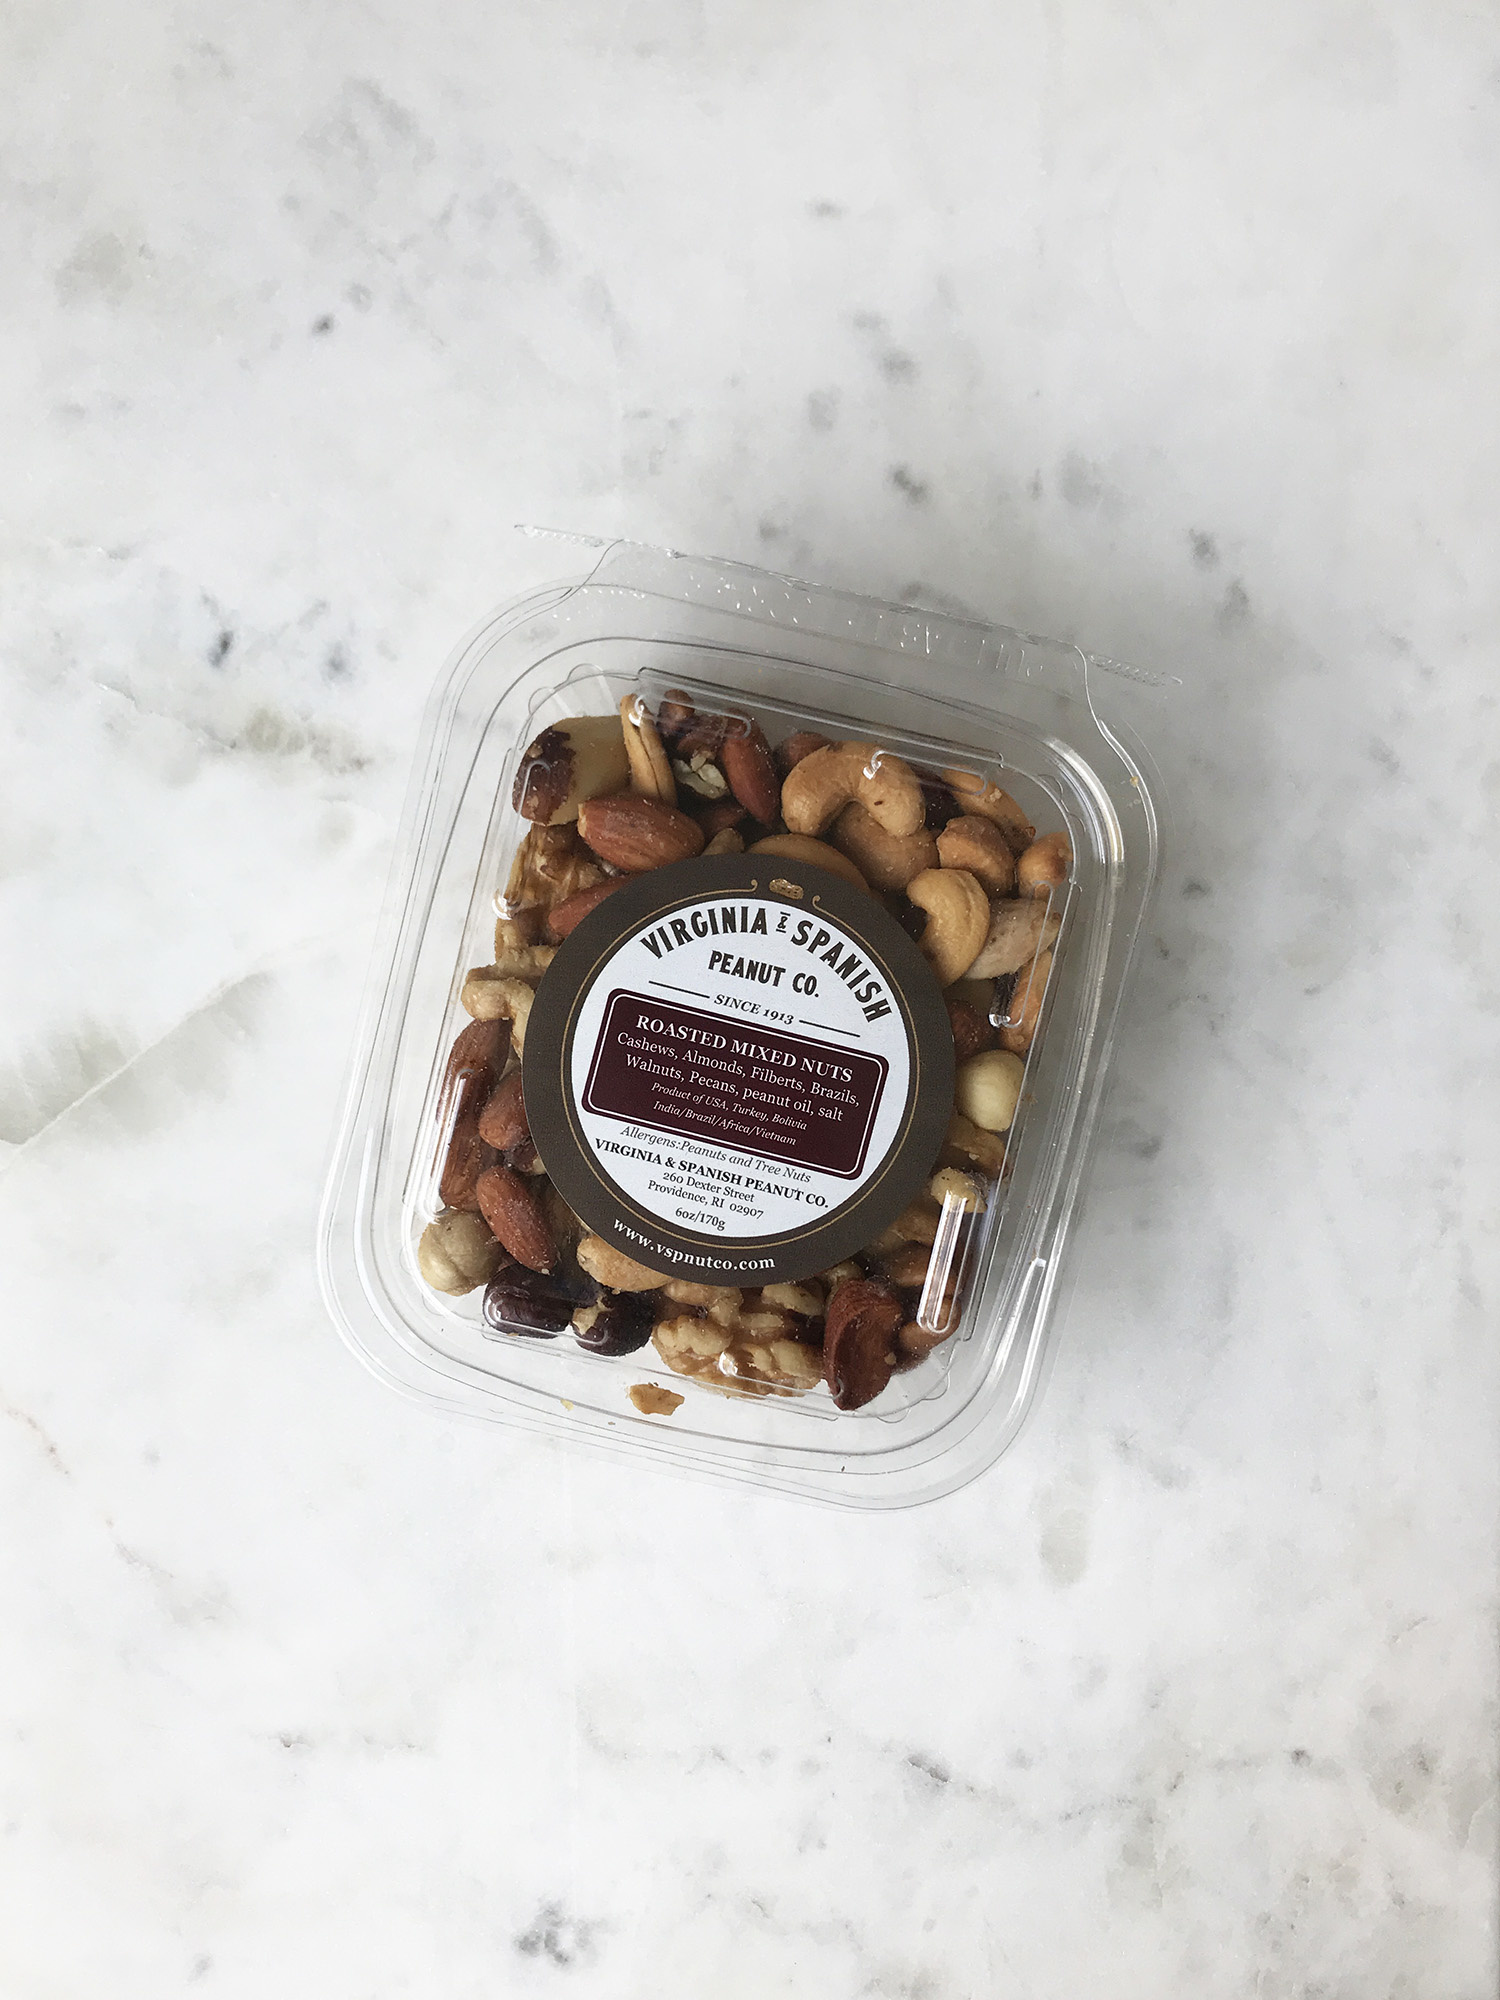 Virginia & Spanish Peanut Co. Roasted Mixed Nuts-1